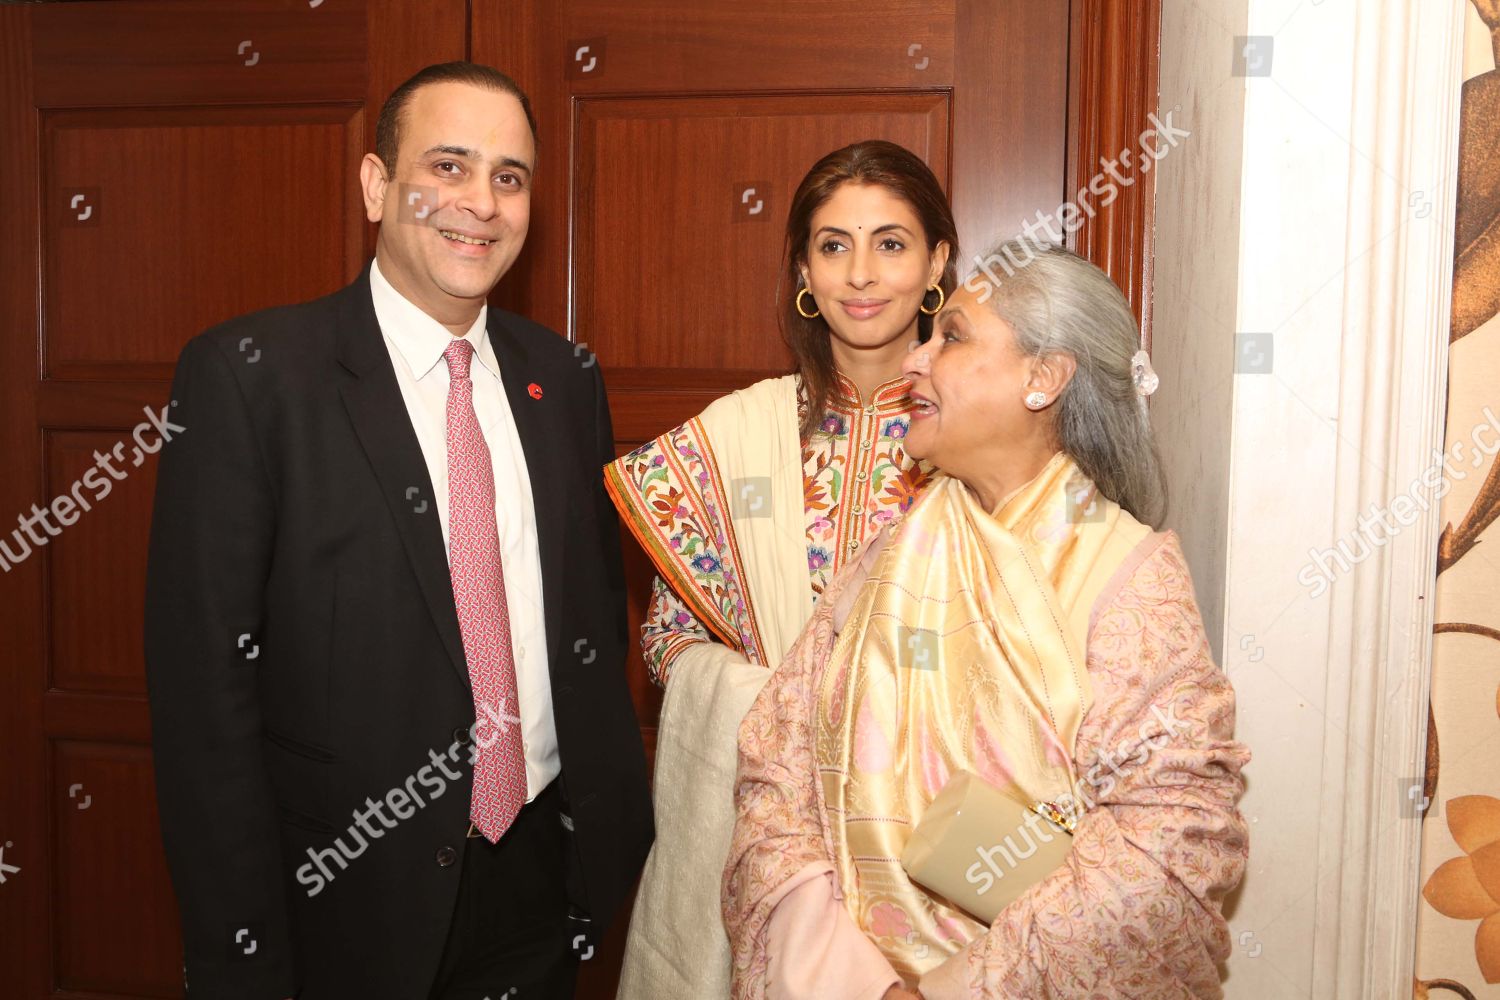 Никхил нанда. Никхил Нанда индийский бизнесмен. Никхил Нанда и Швета Баччан фото. Никхил Нанда биография семья дети фото сейчас 2020.